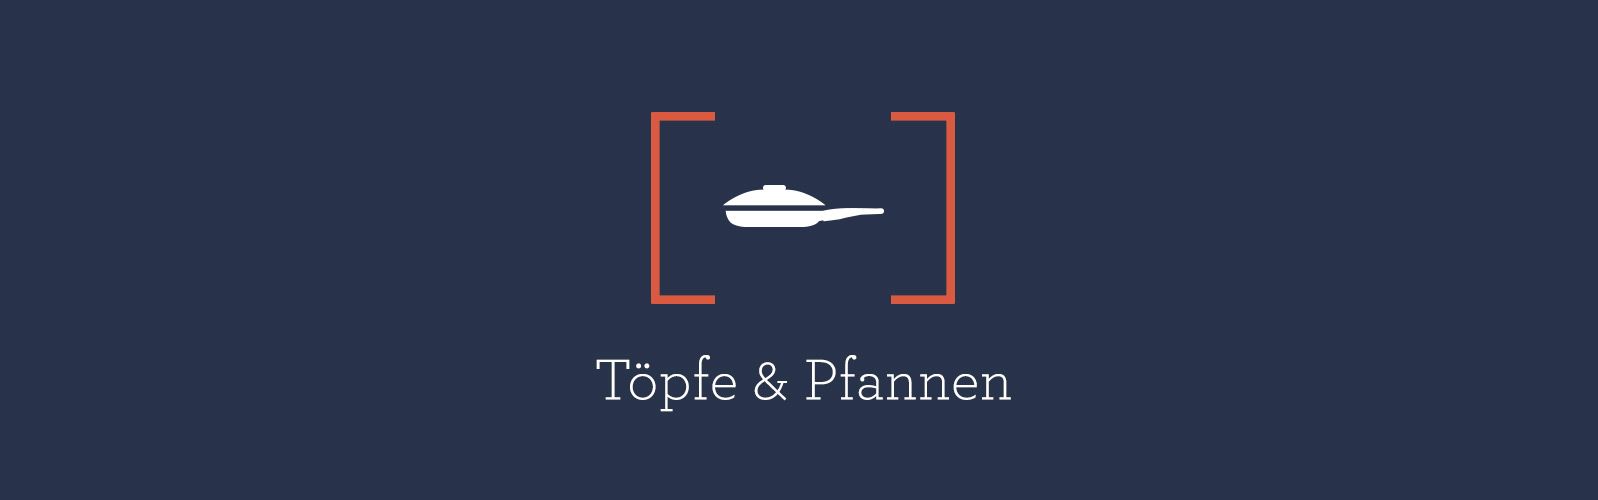 Töpfe & Pfannen 